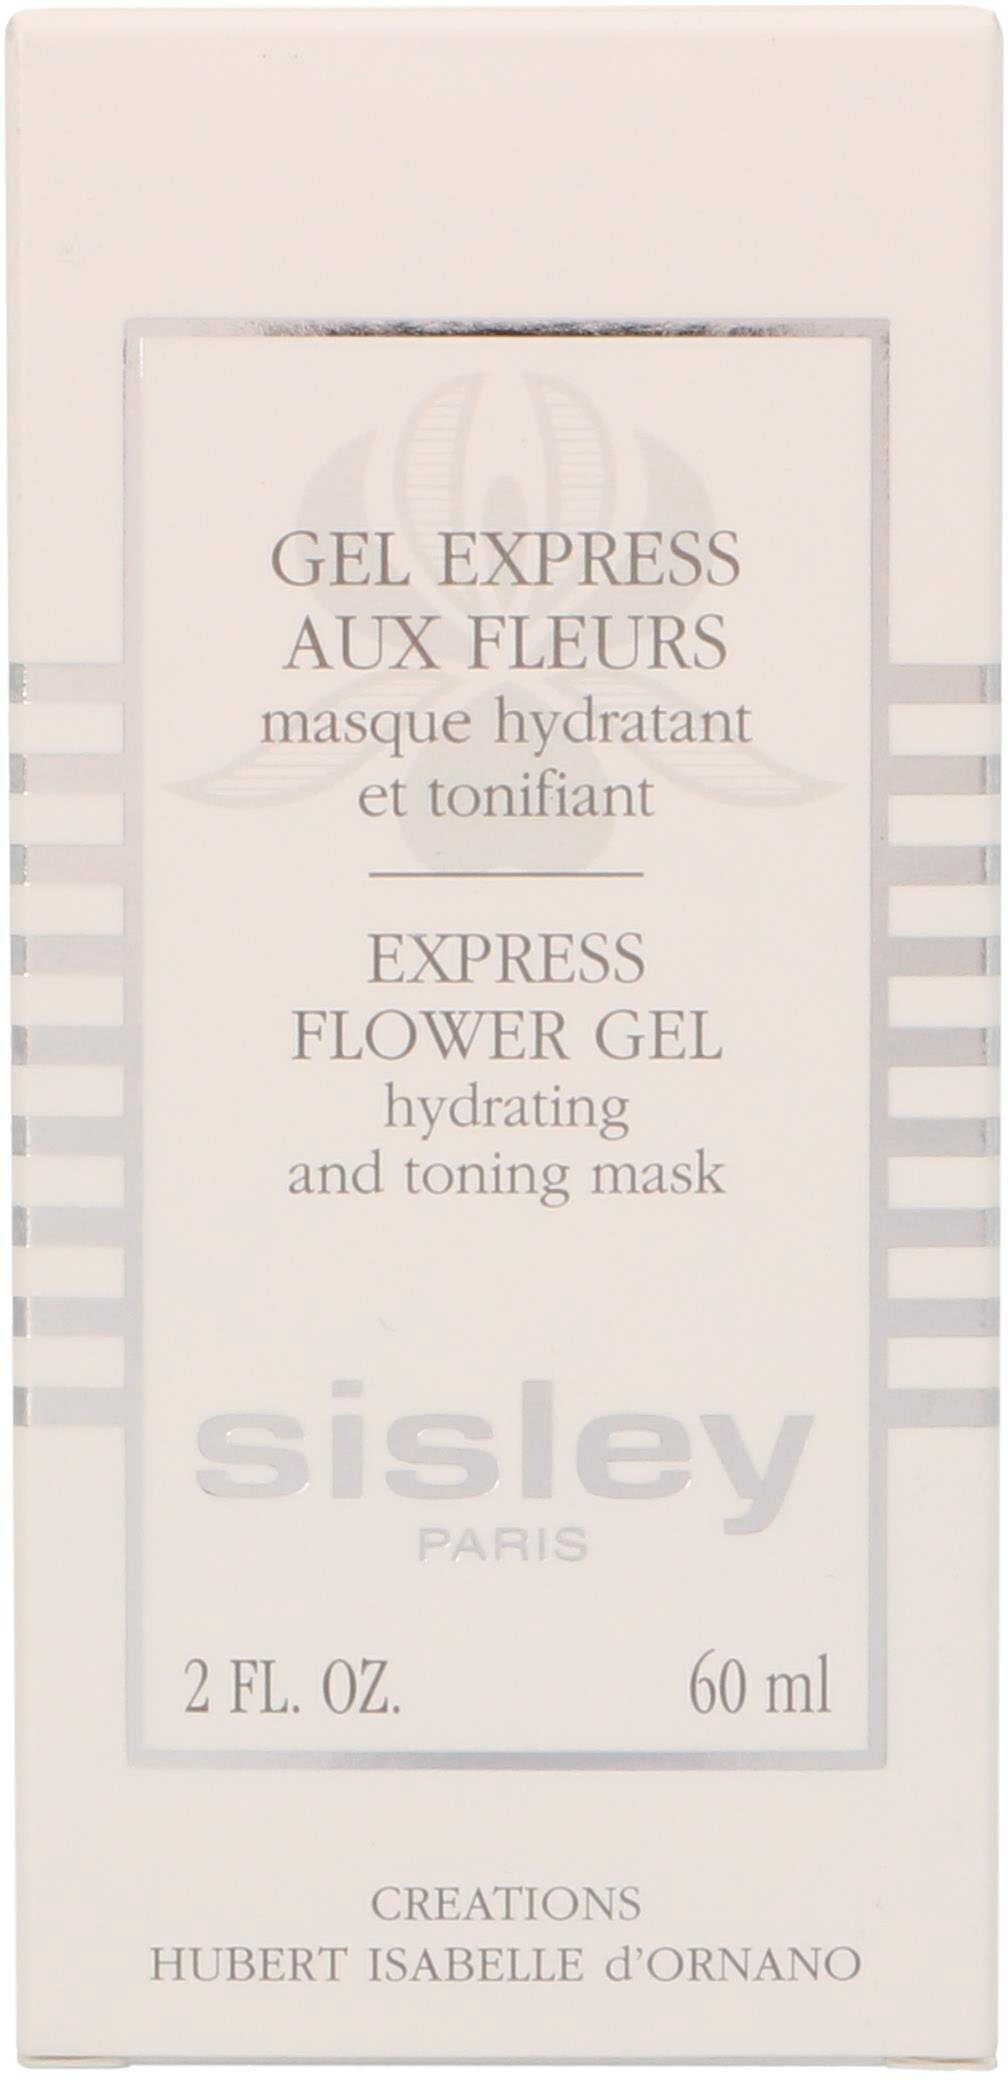 Express Flower Gel sisley Gesichtsgel